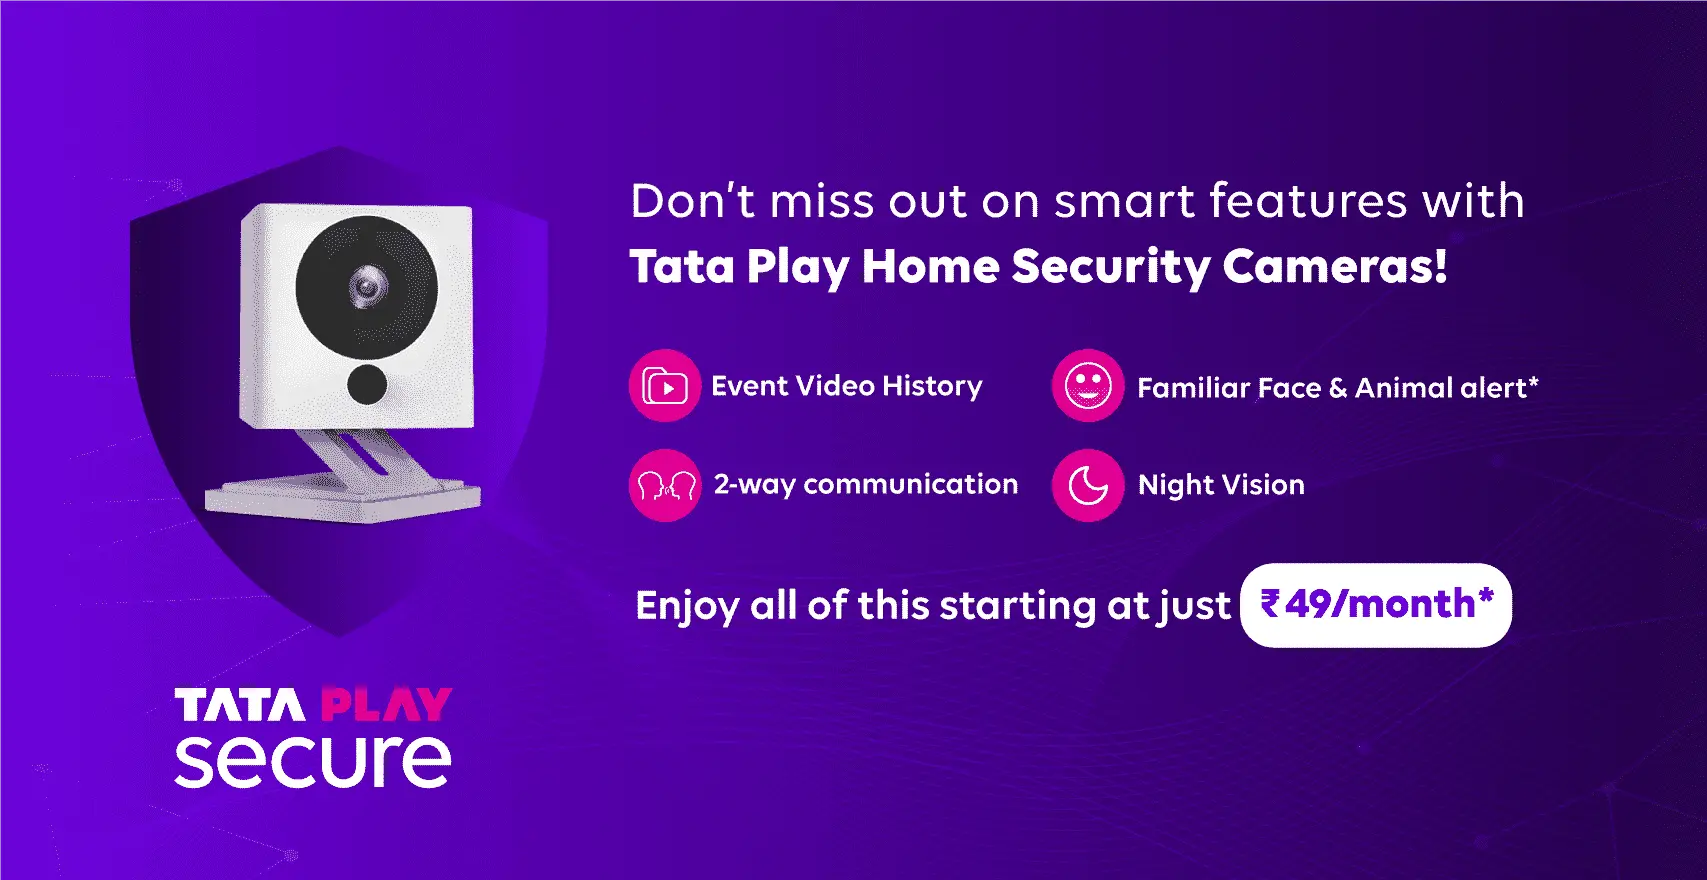 Tata Play Home Security Cameras